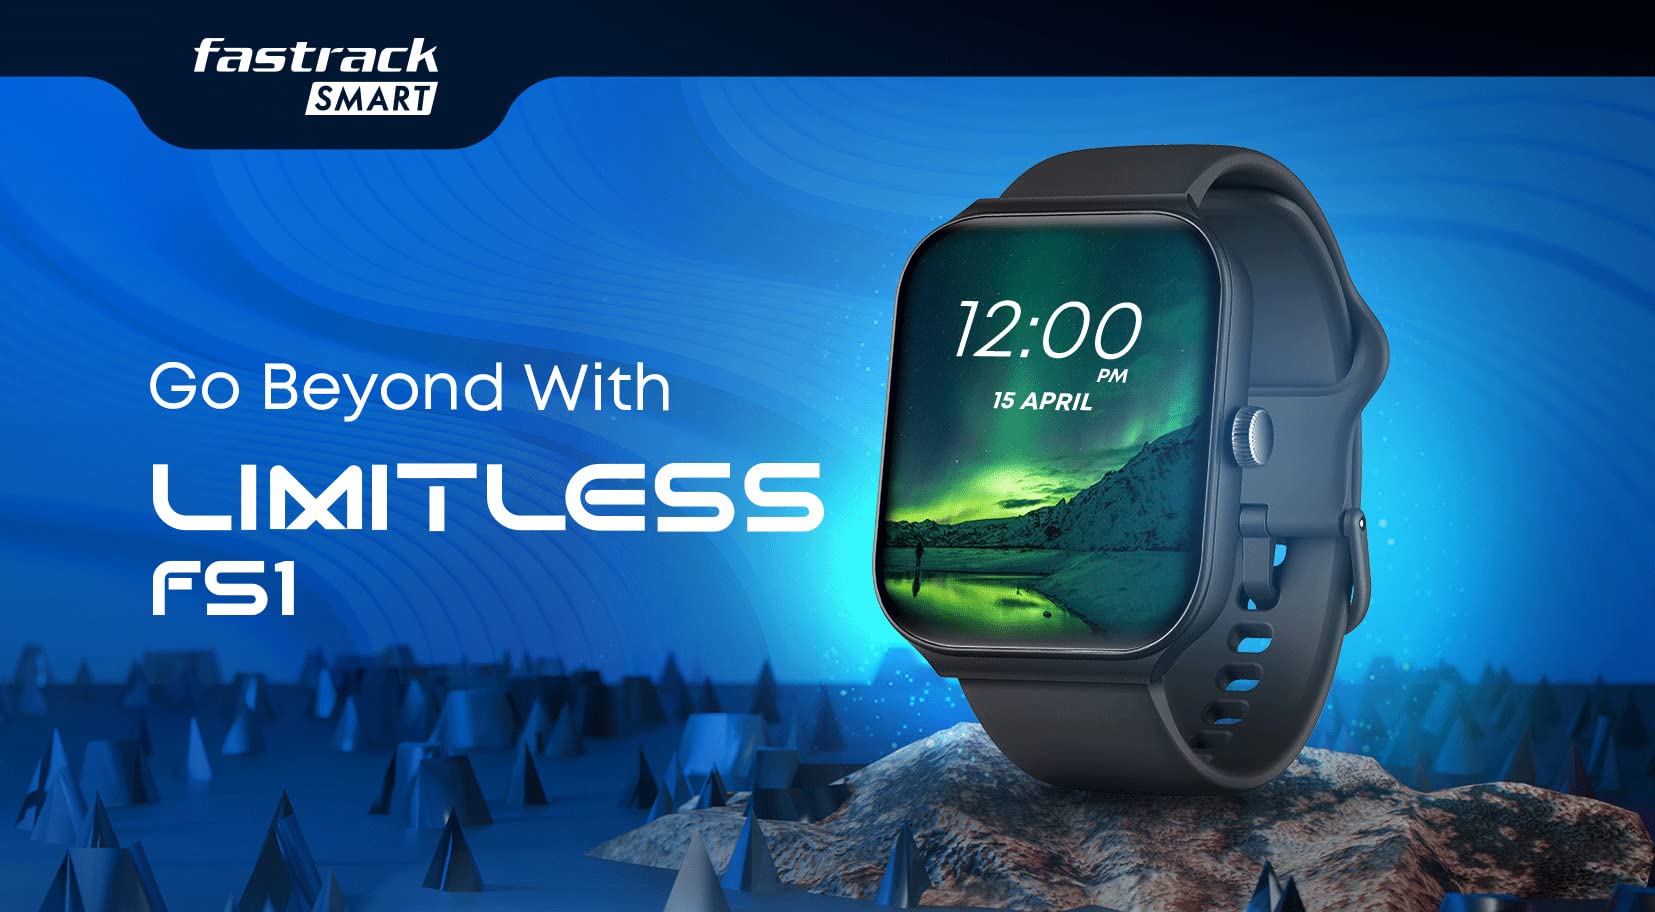 Fastrack Reflex Horizon Smartwatch Price in India 2023, Full Specs & Review